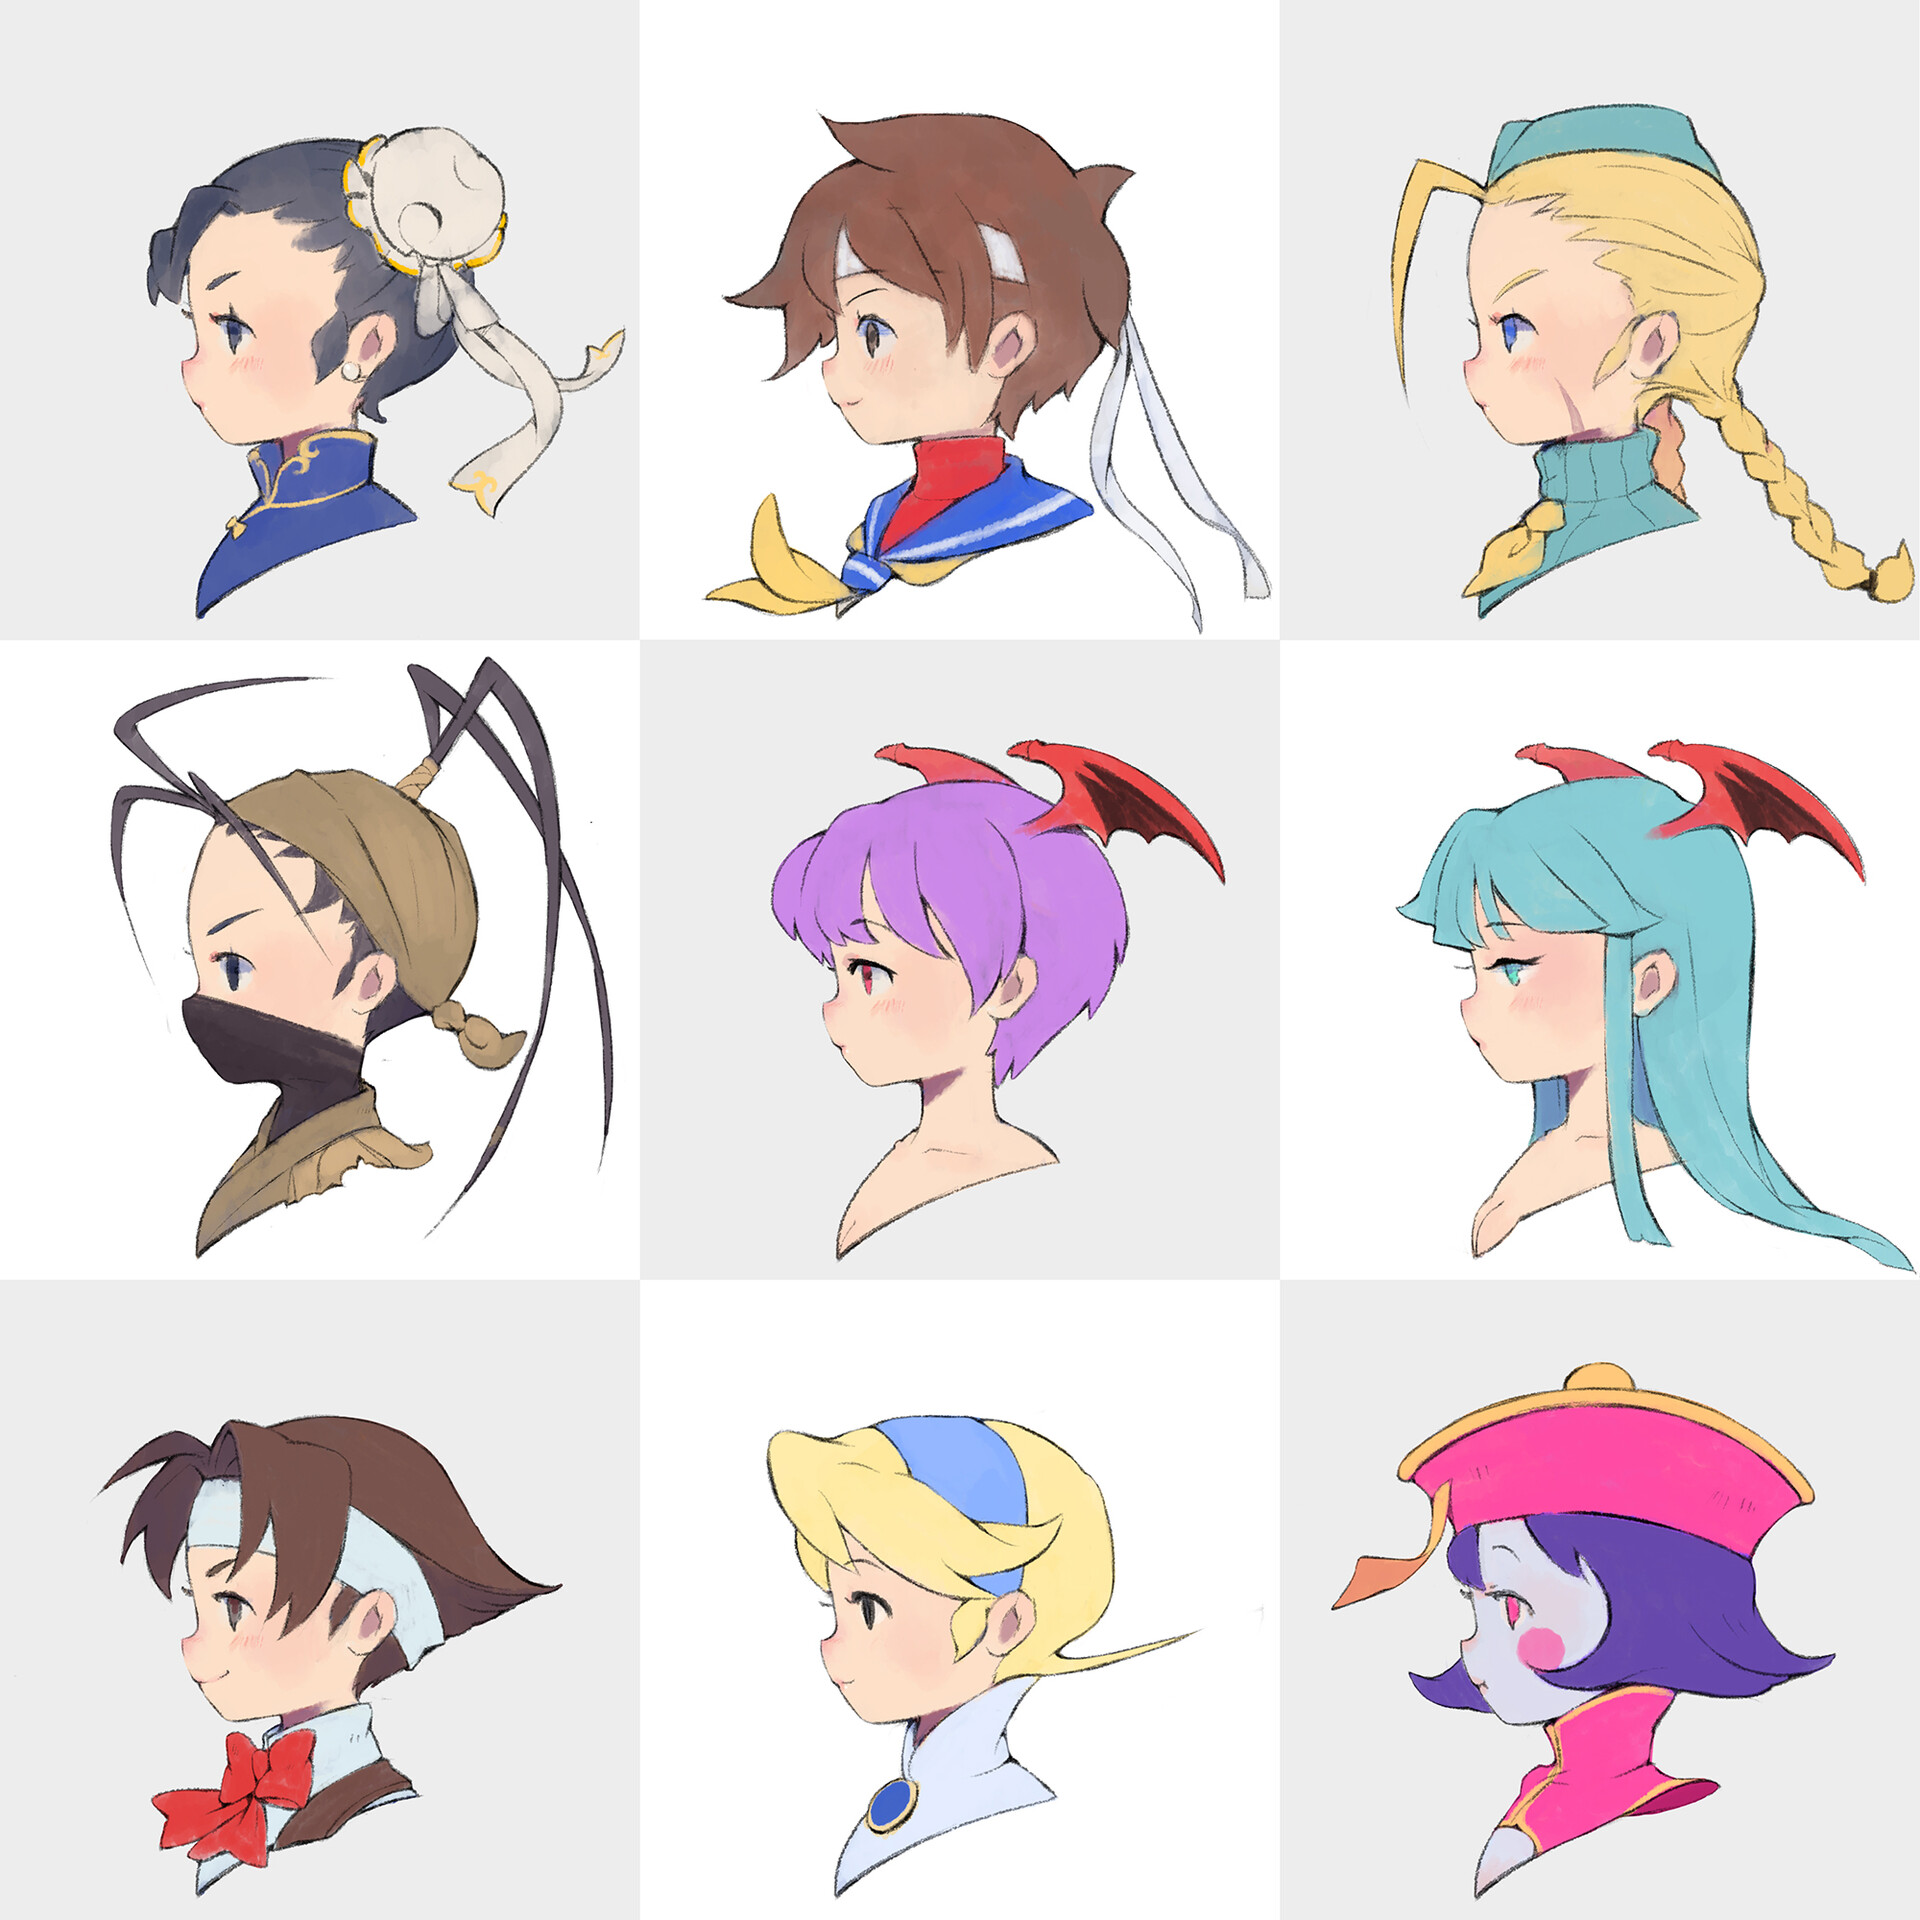 Ain  Capcom art, Female characters, Concept art characters